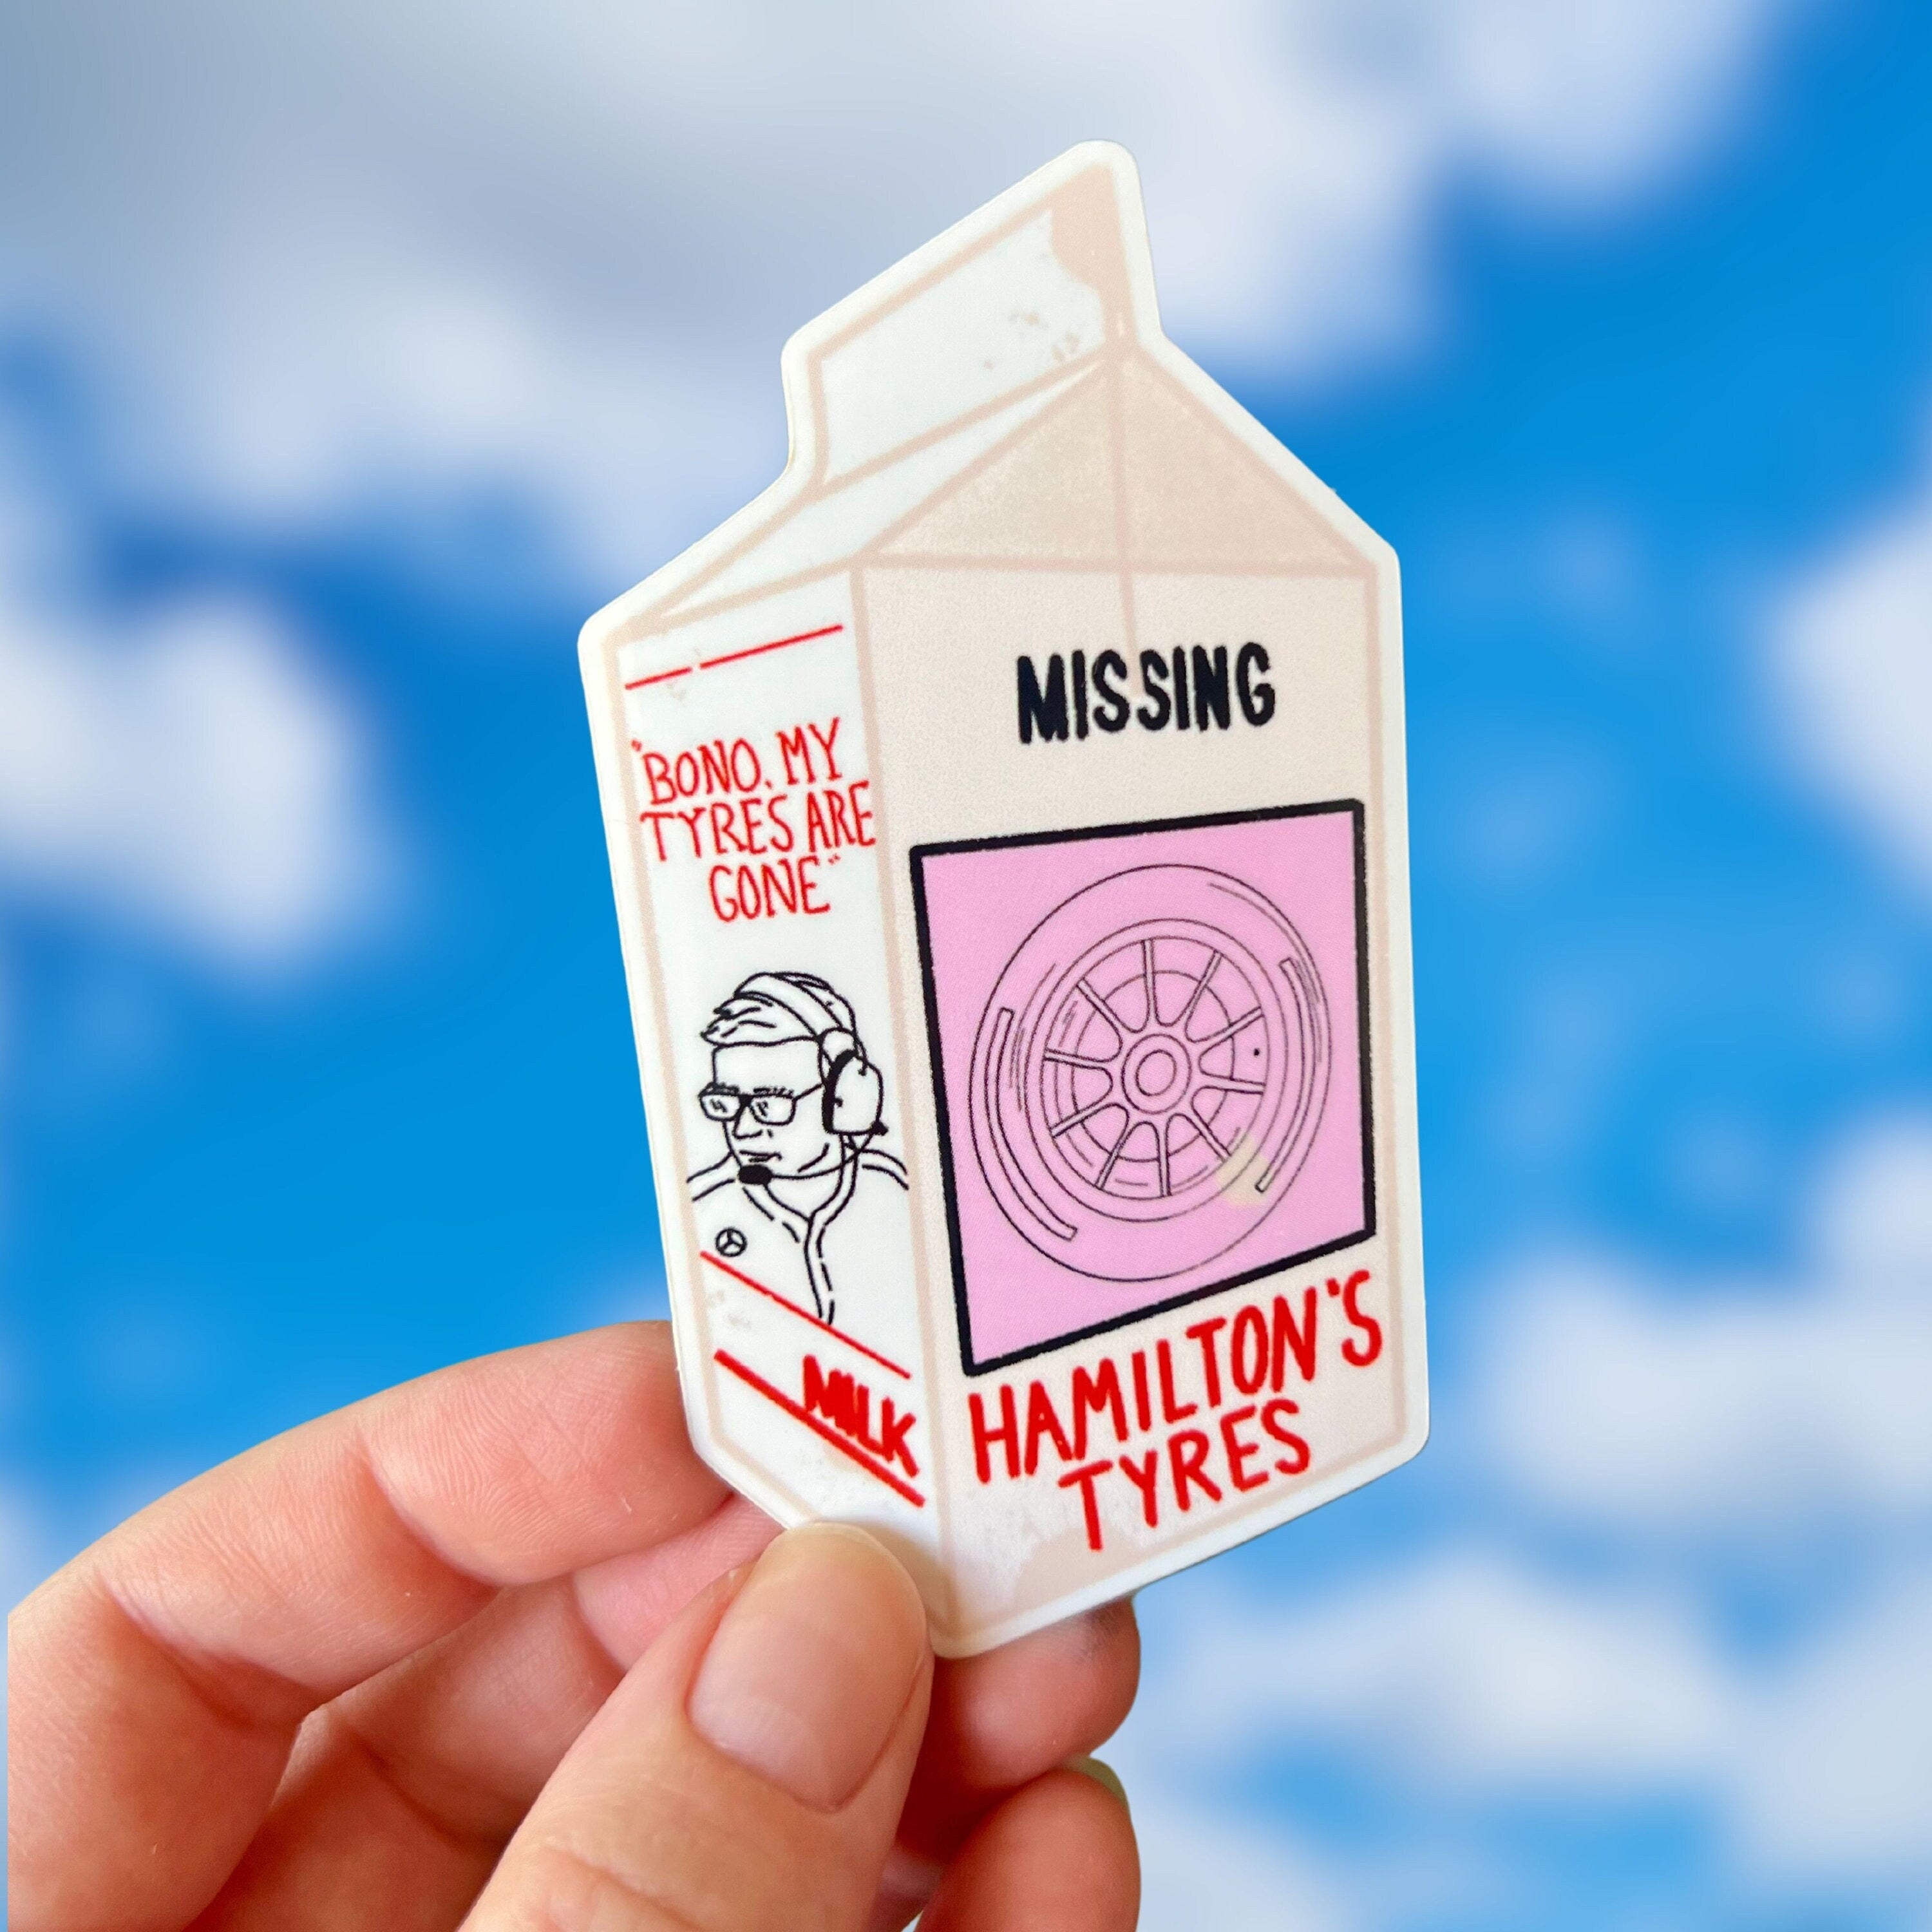 Lewis Hamilton "Missing Tyres" milk carton sticker